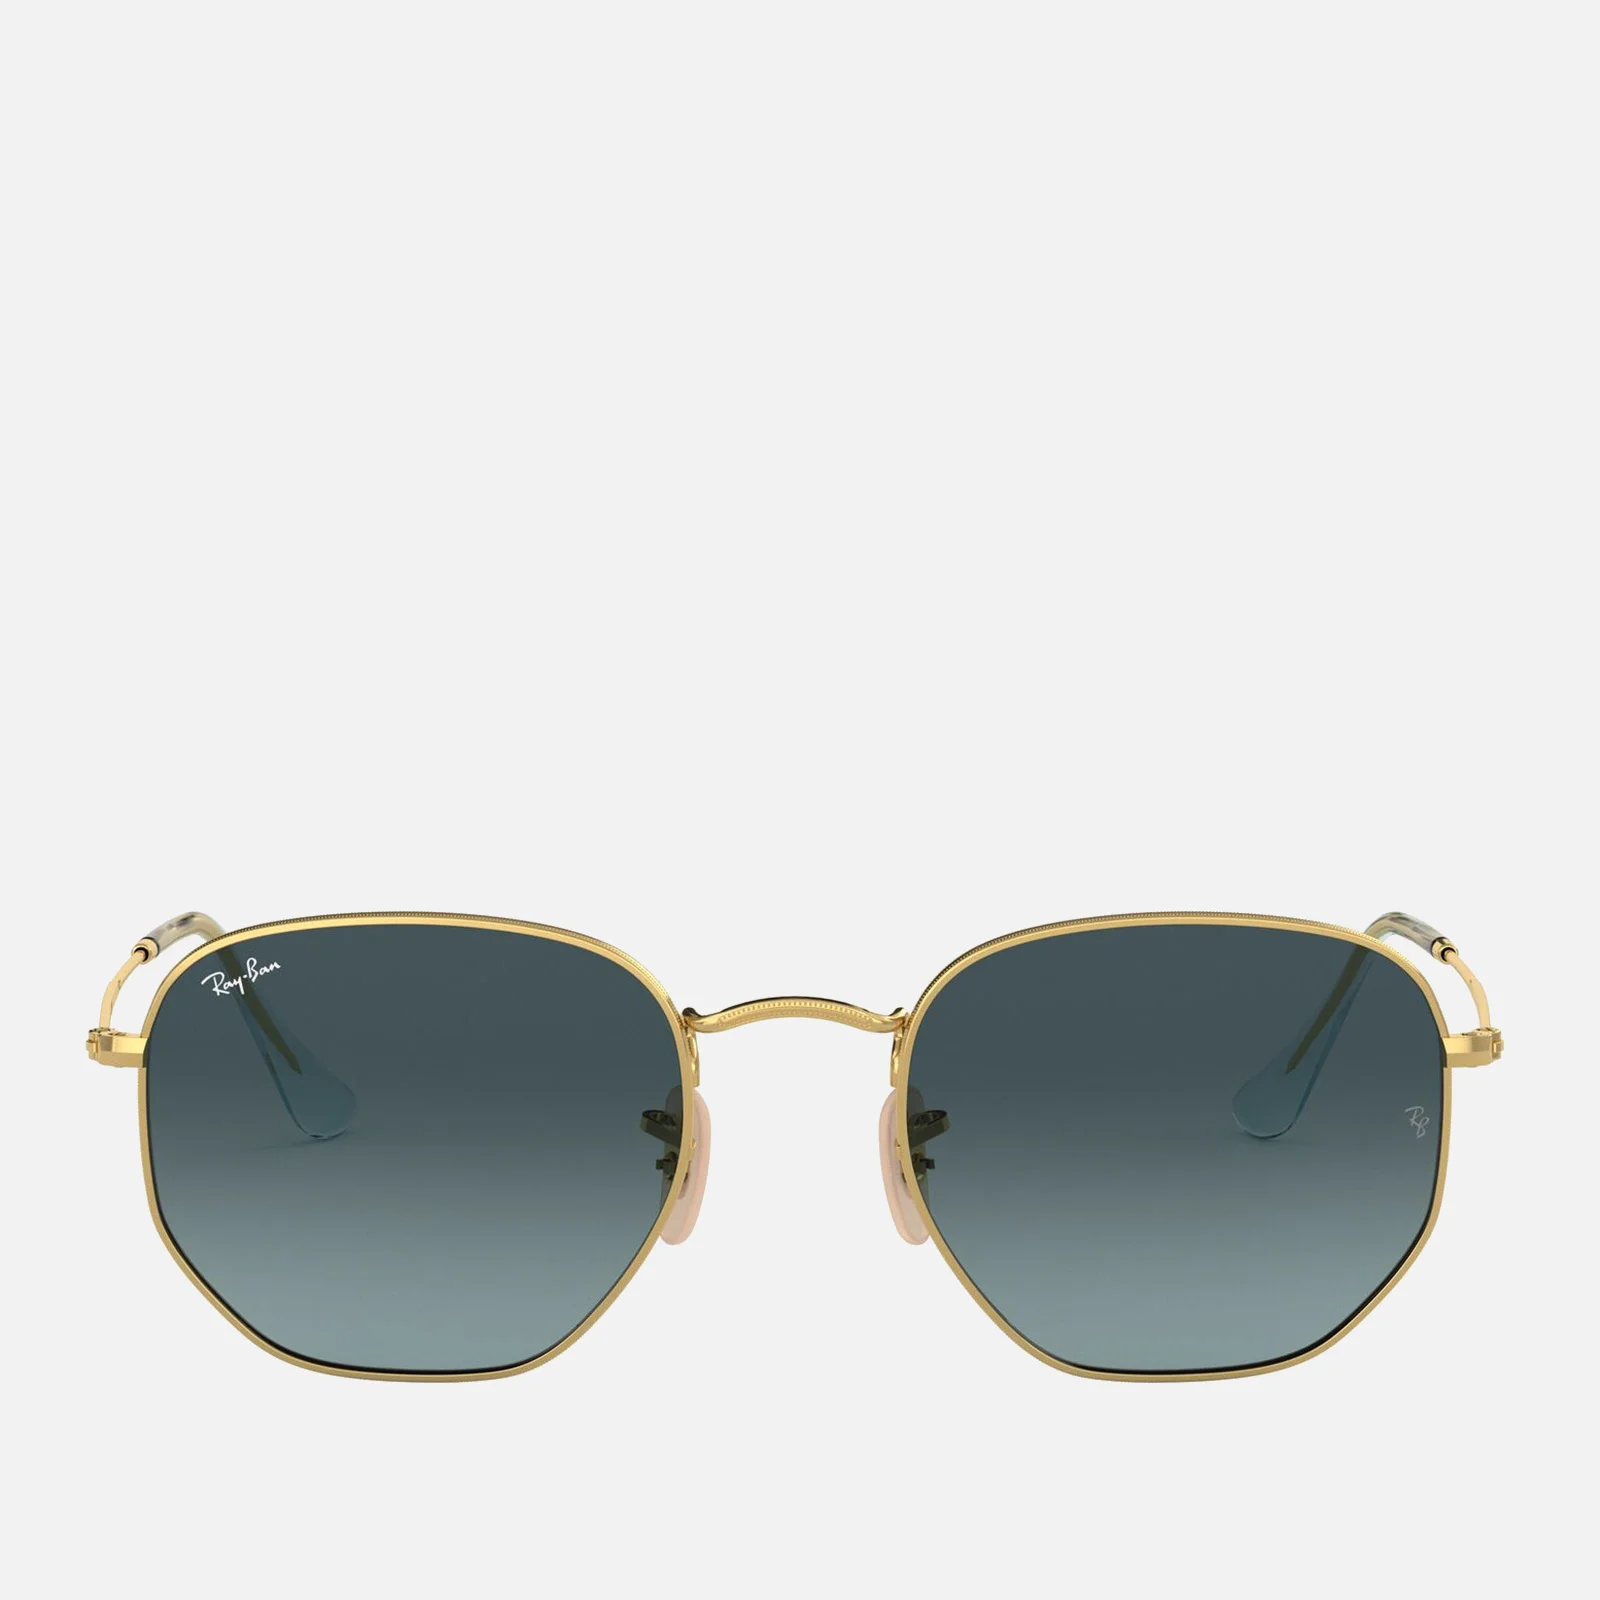 Ray-Ban Hexagonal Metal Sunglasses - Gold/Blue Image 1